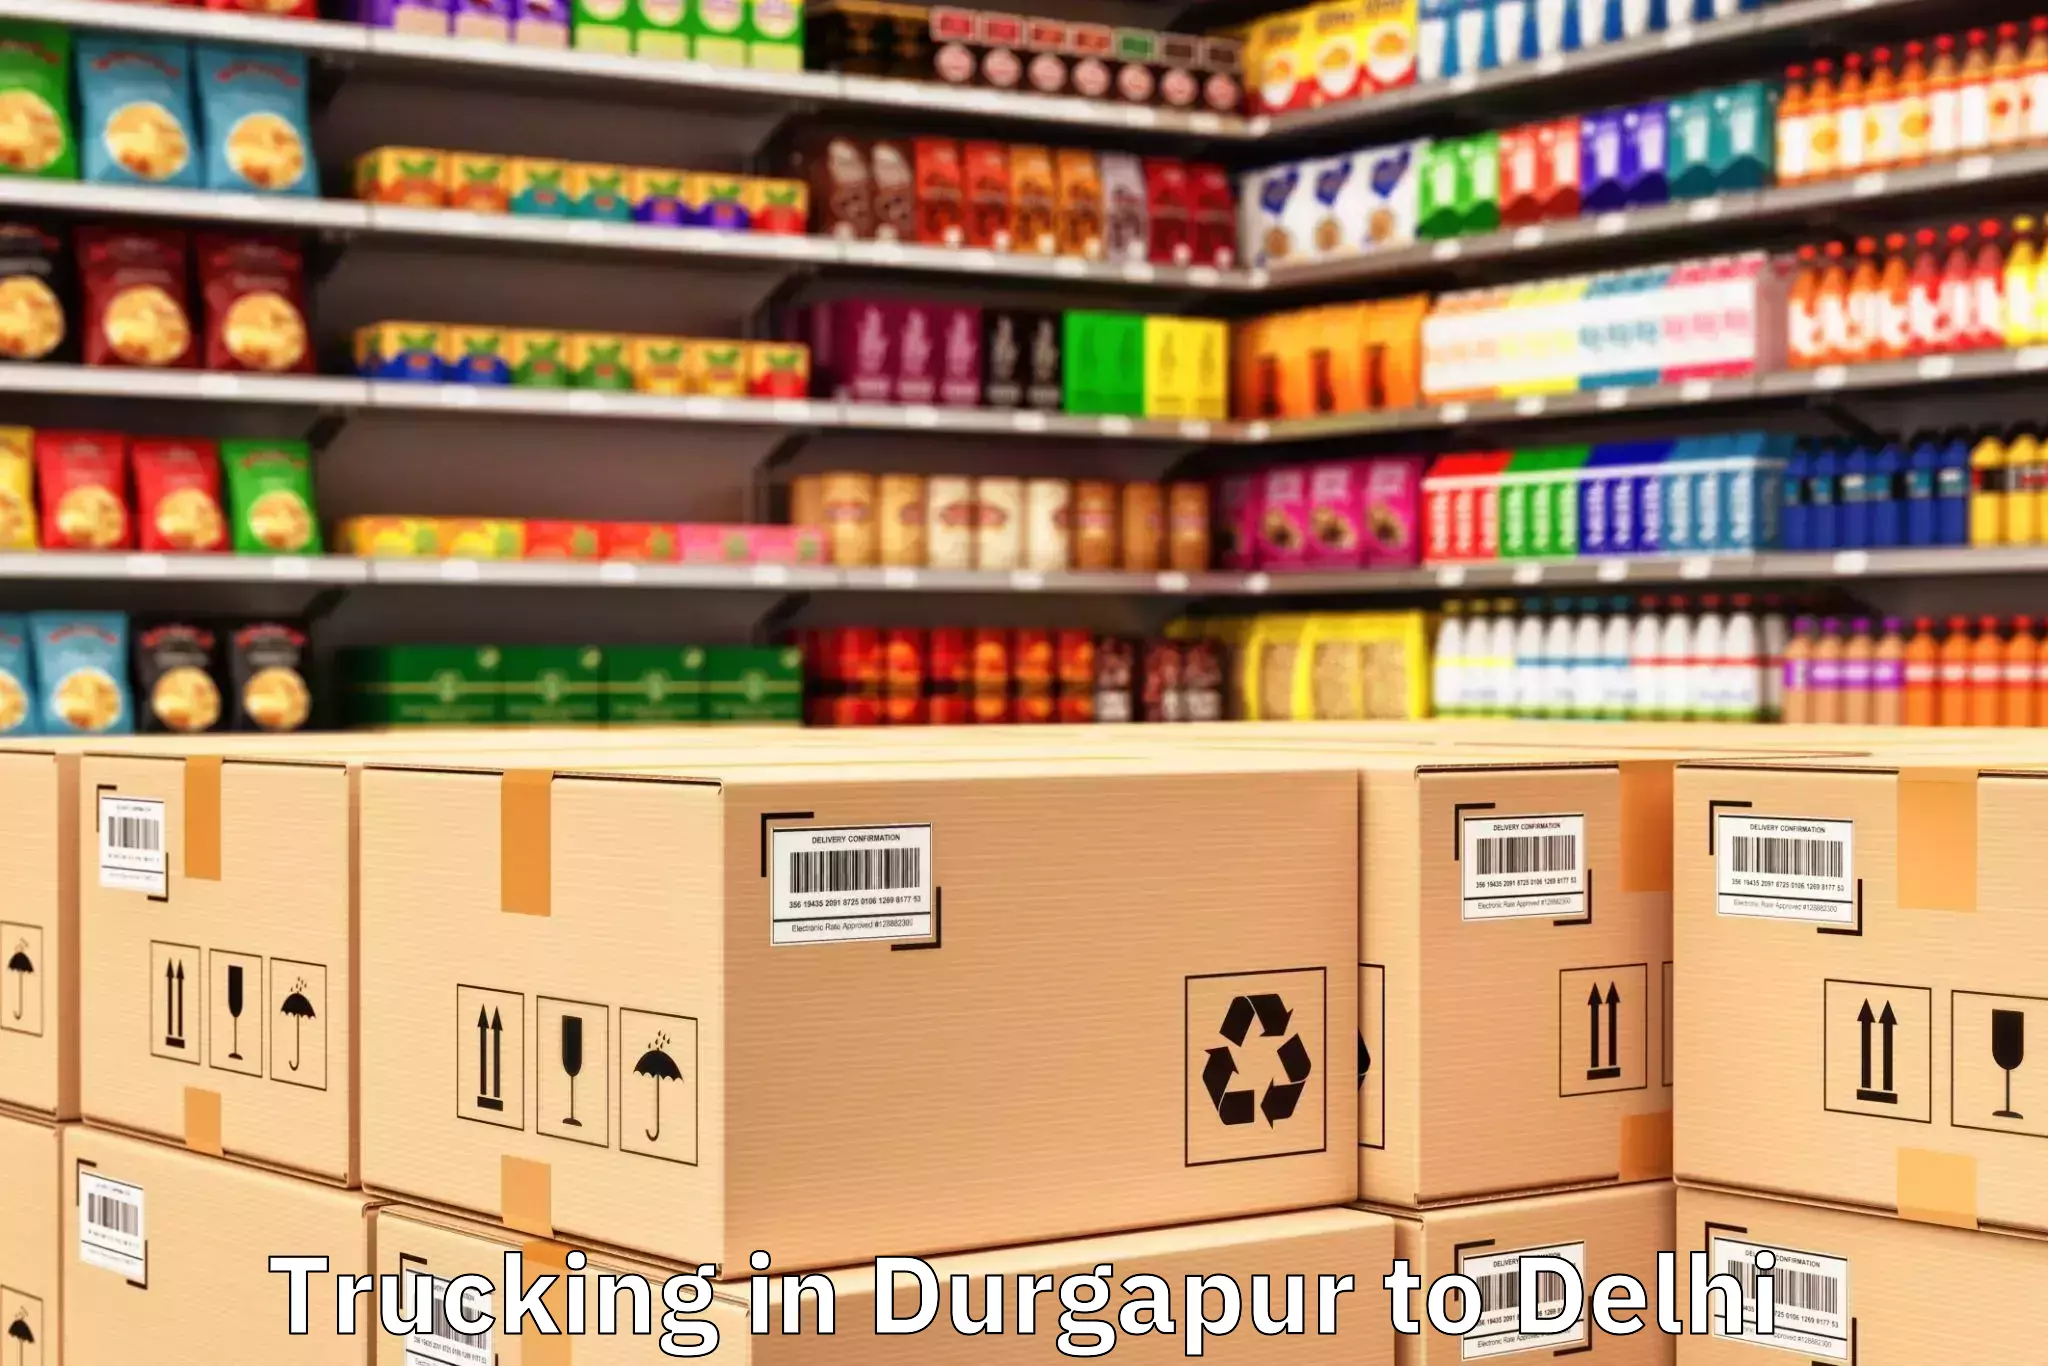 Quality Durgapur to Parsvnath Mall Netaji Subhash Place Trucking